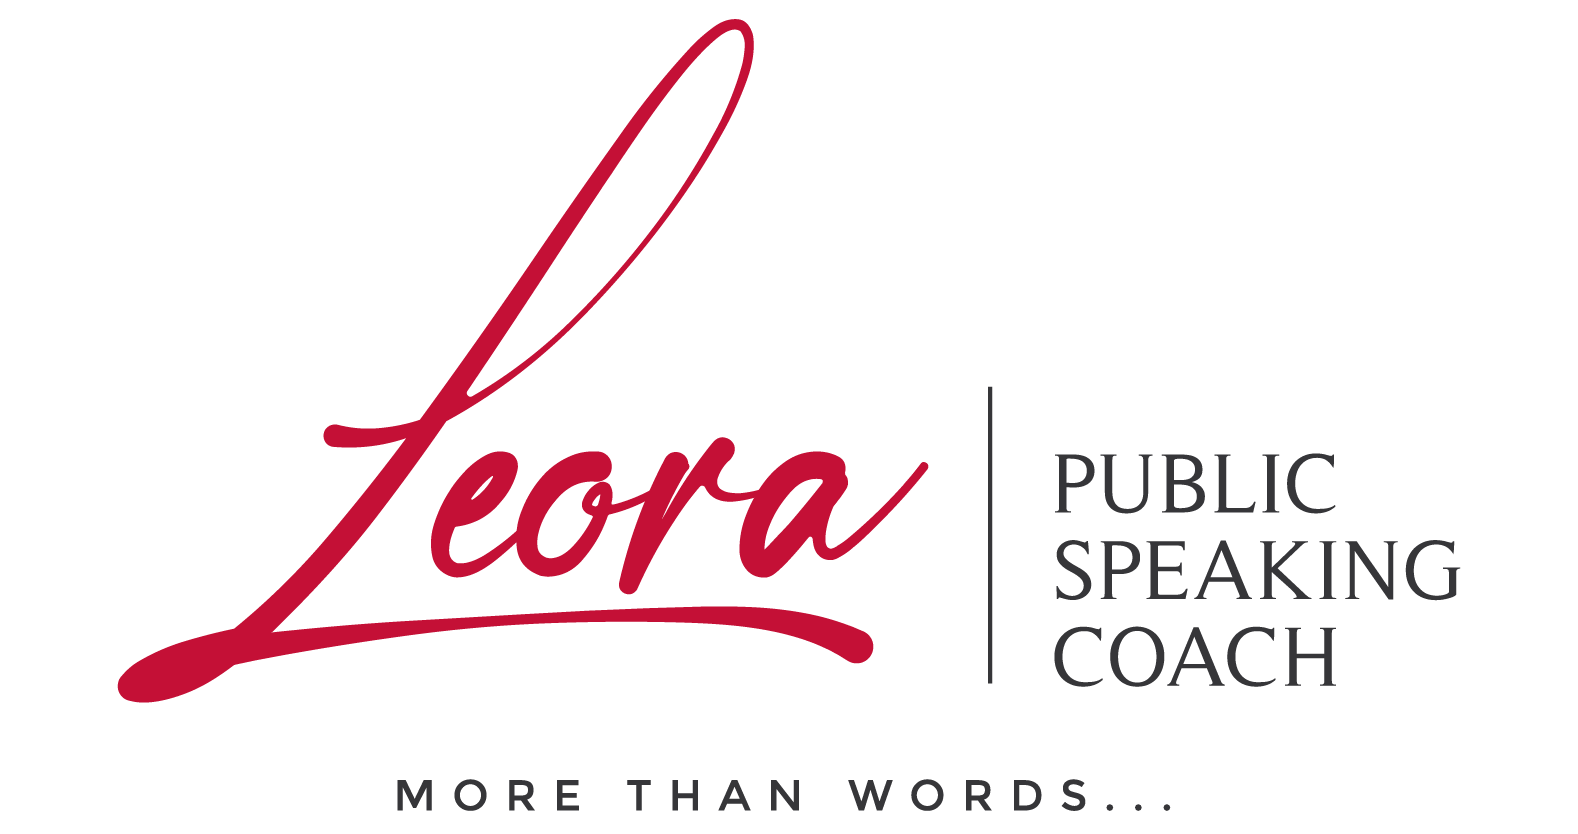 Leora  Public Speaking Coach more than words Logo